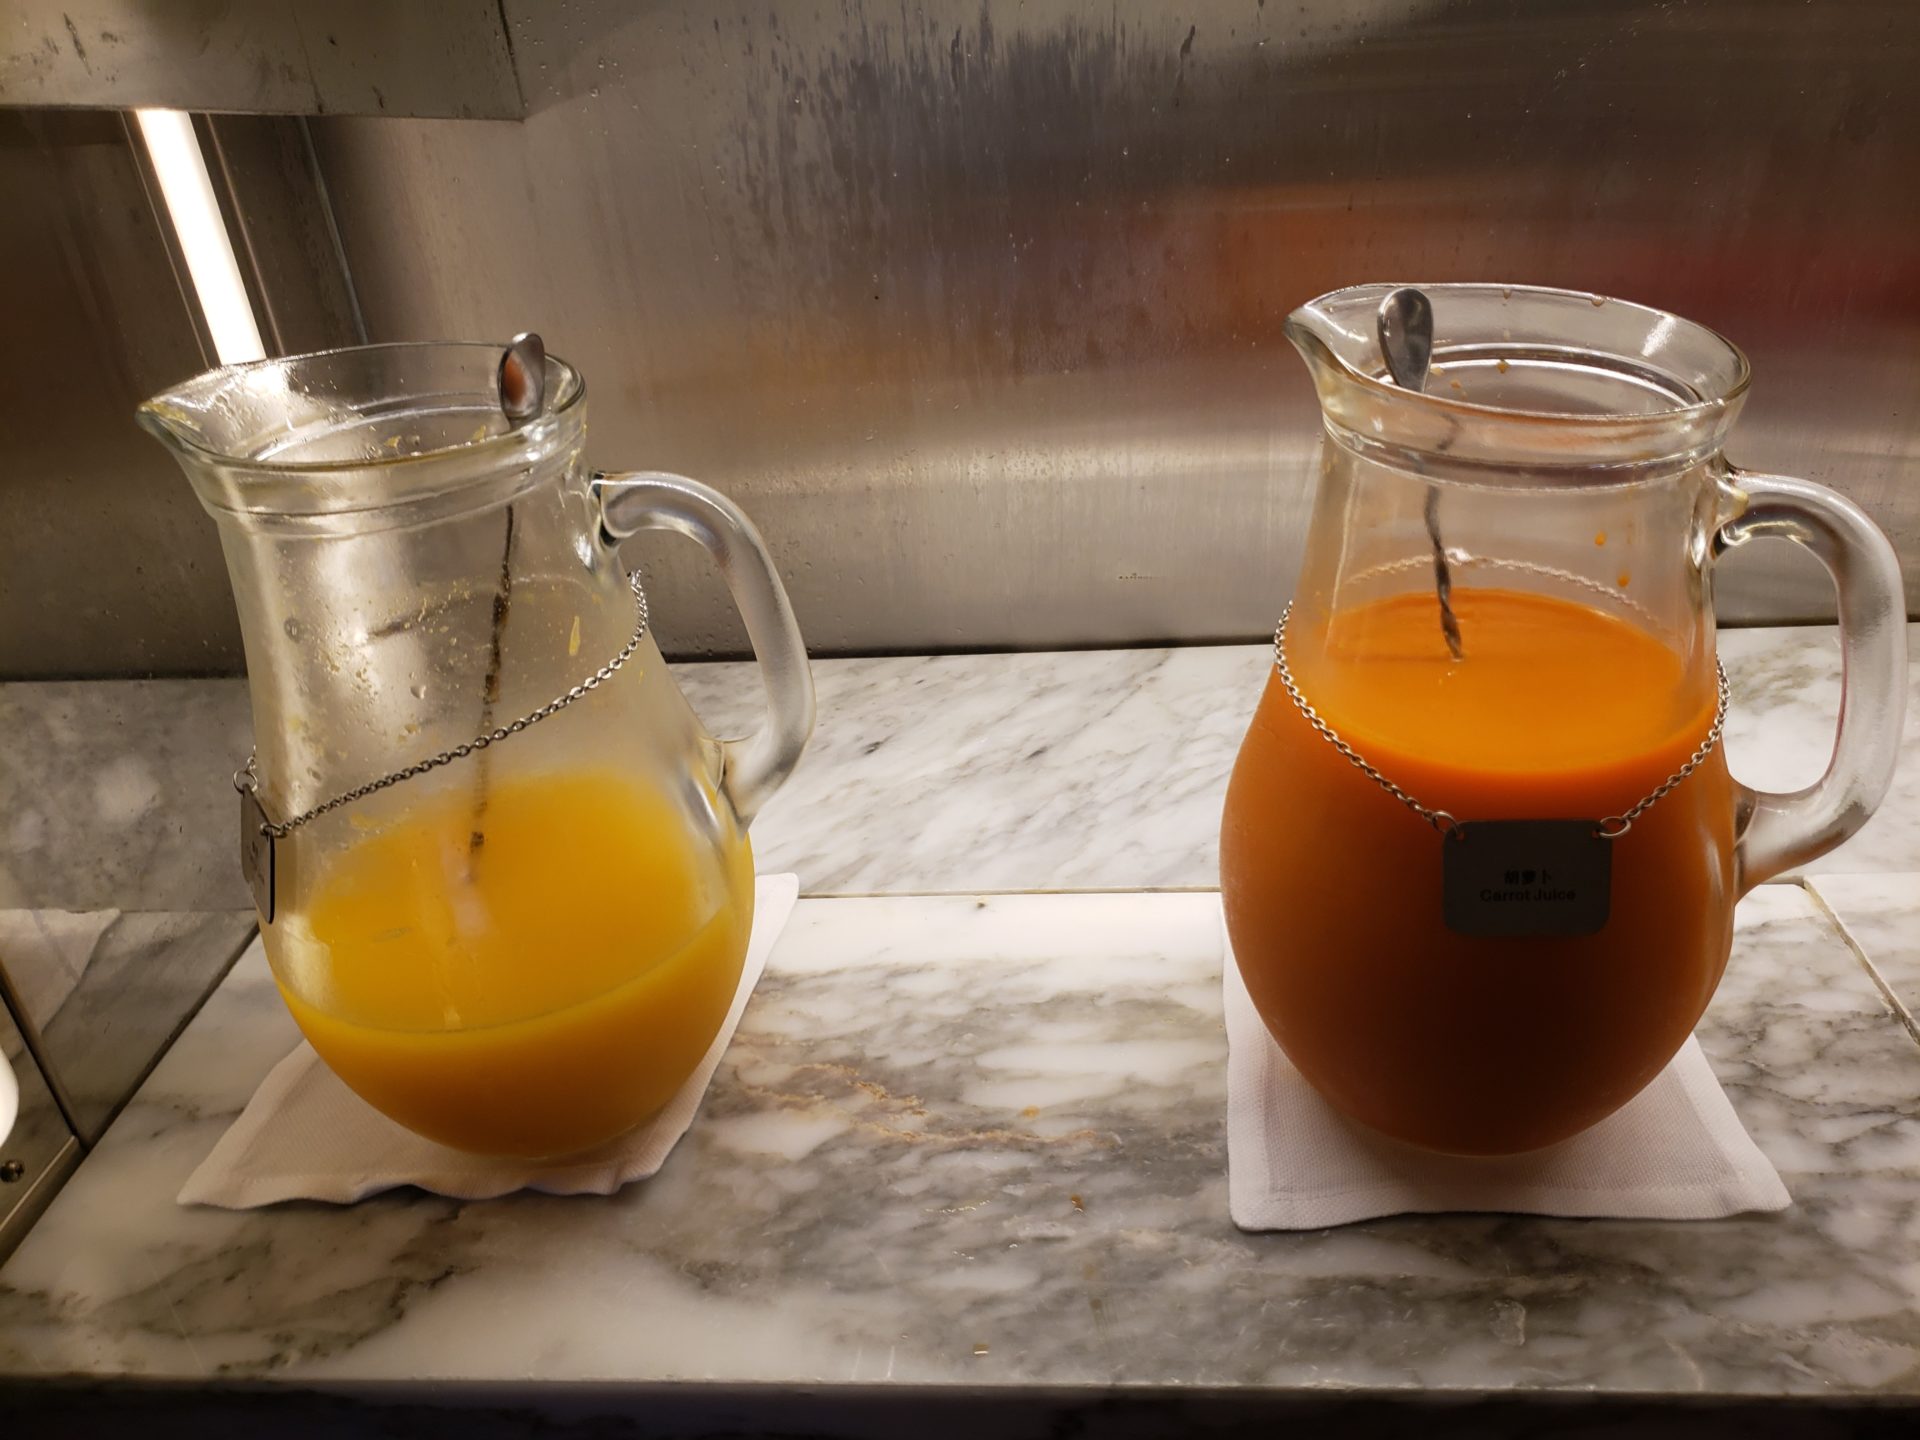 a pitcher of orange juice and a glass of orange juice